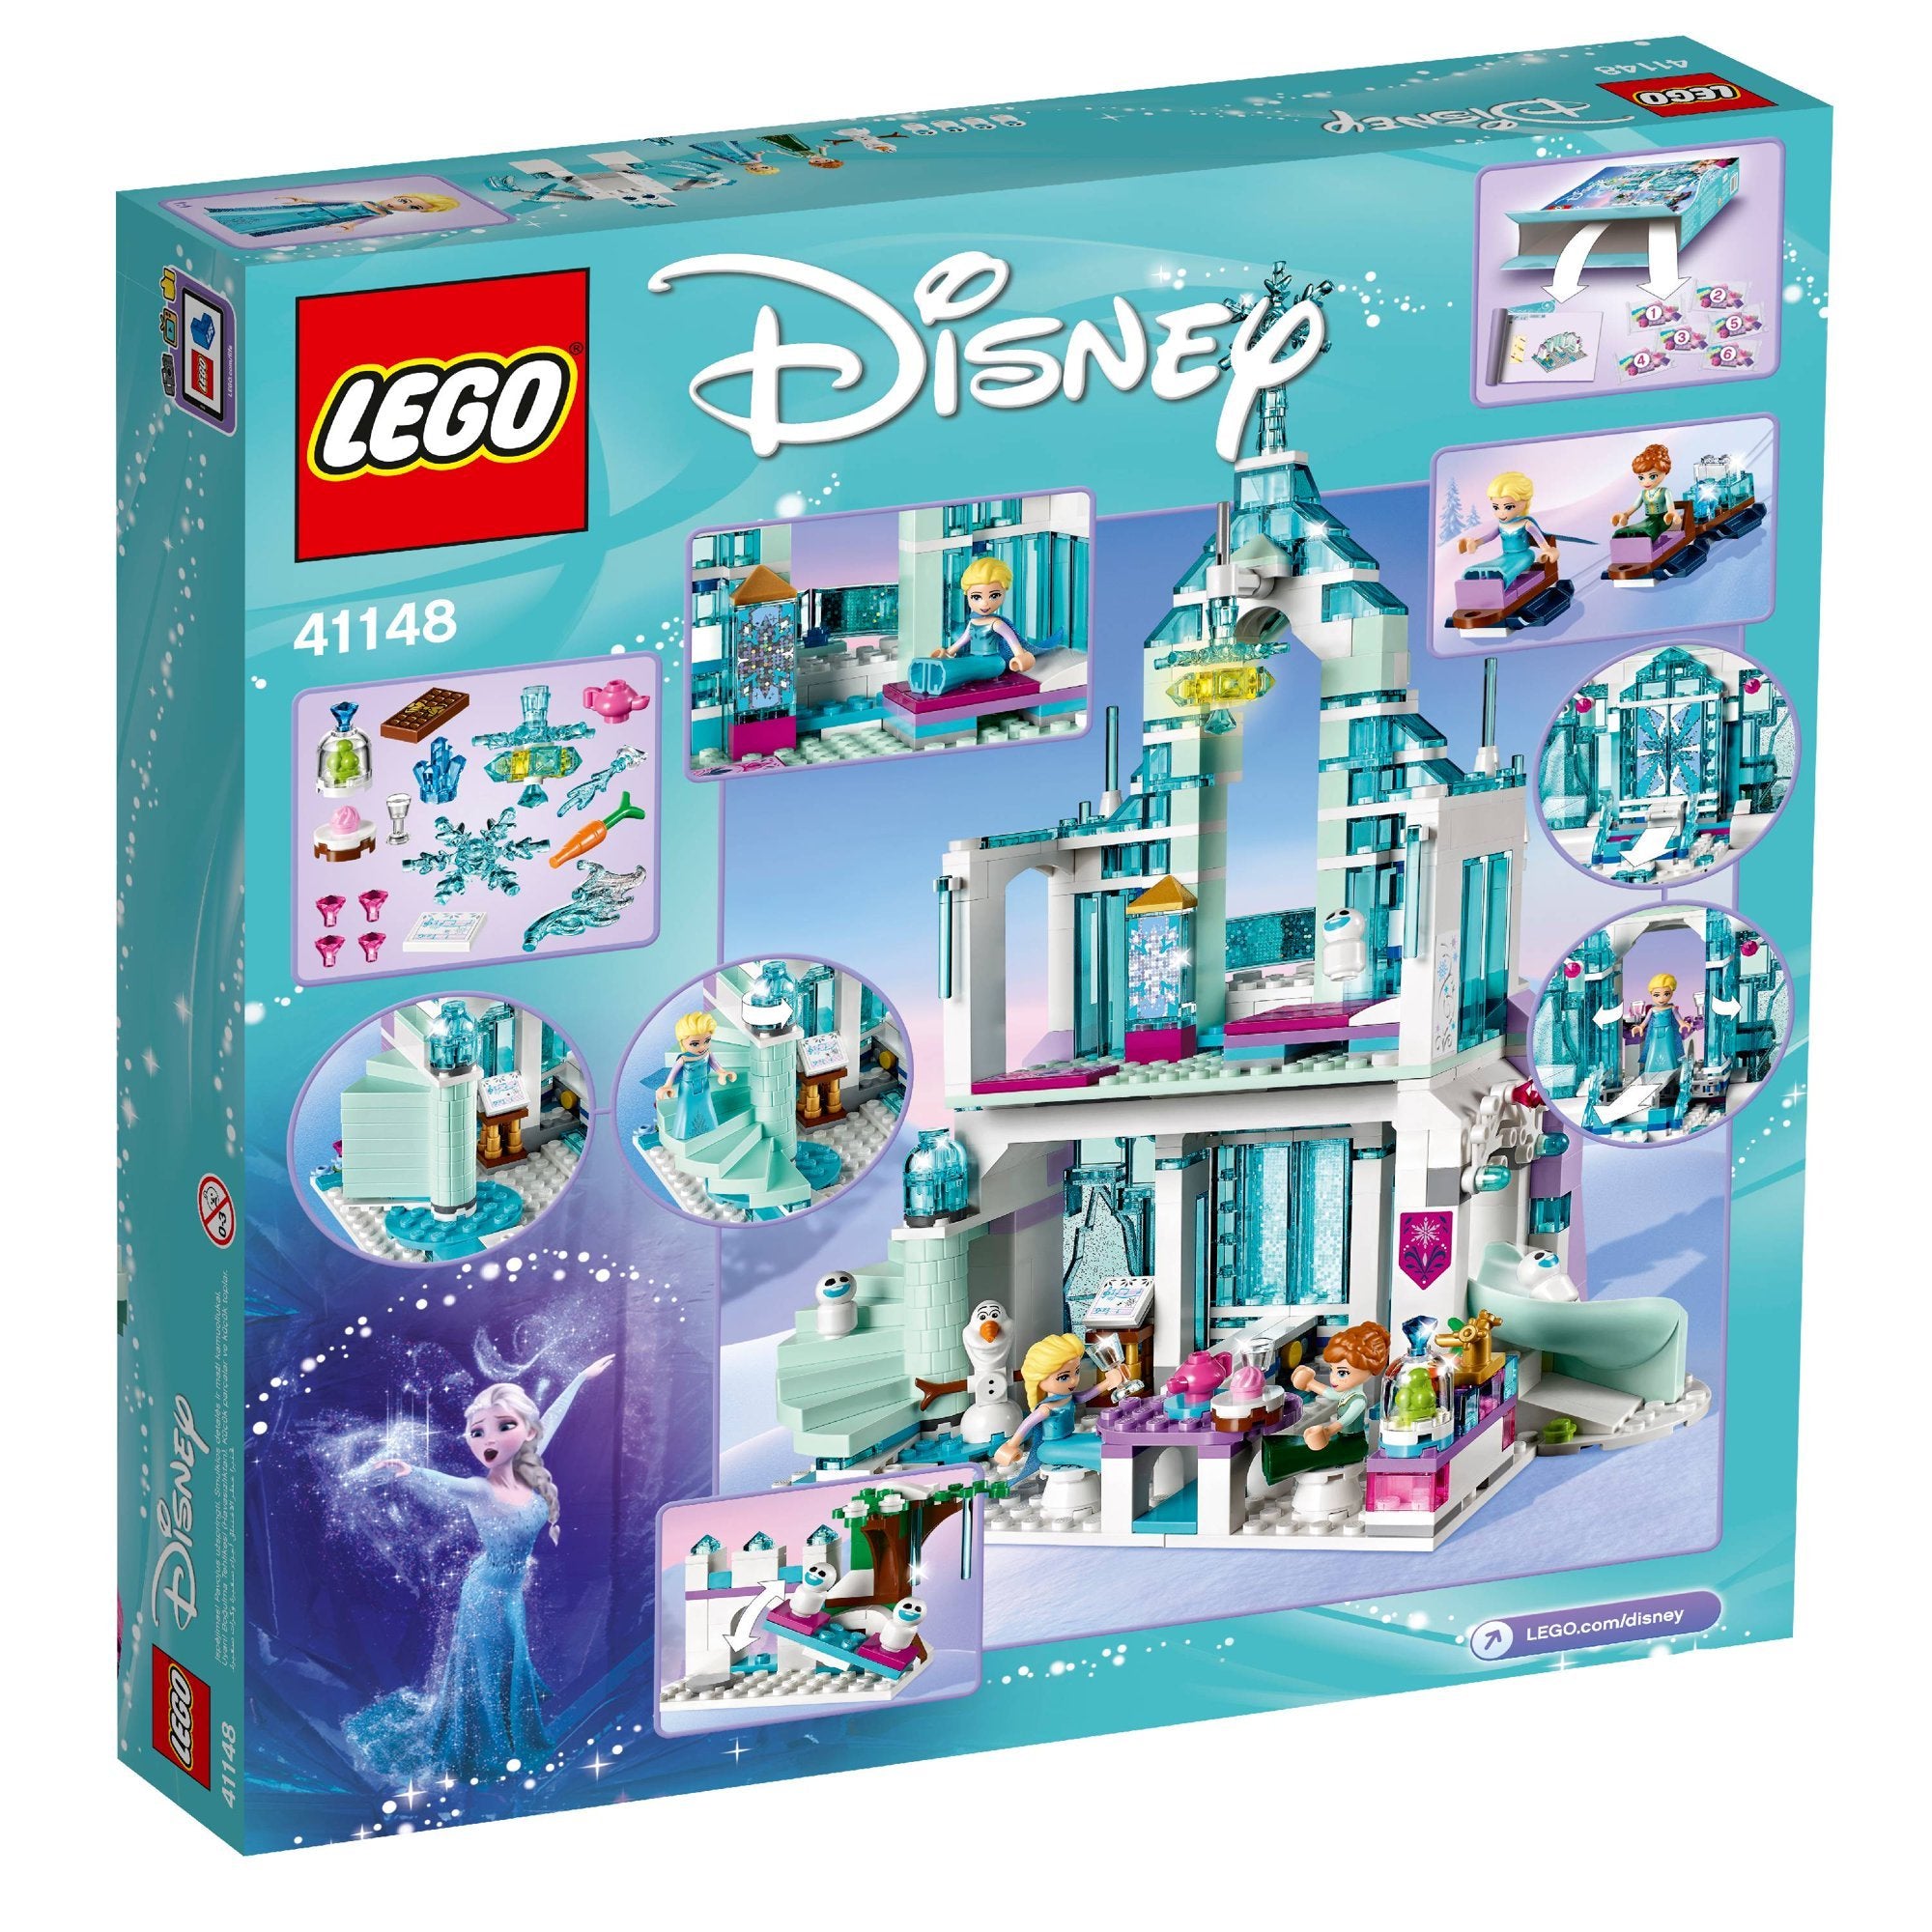 LEGO Disney Princess Elsa's Magical Ice Palace-41148